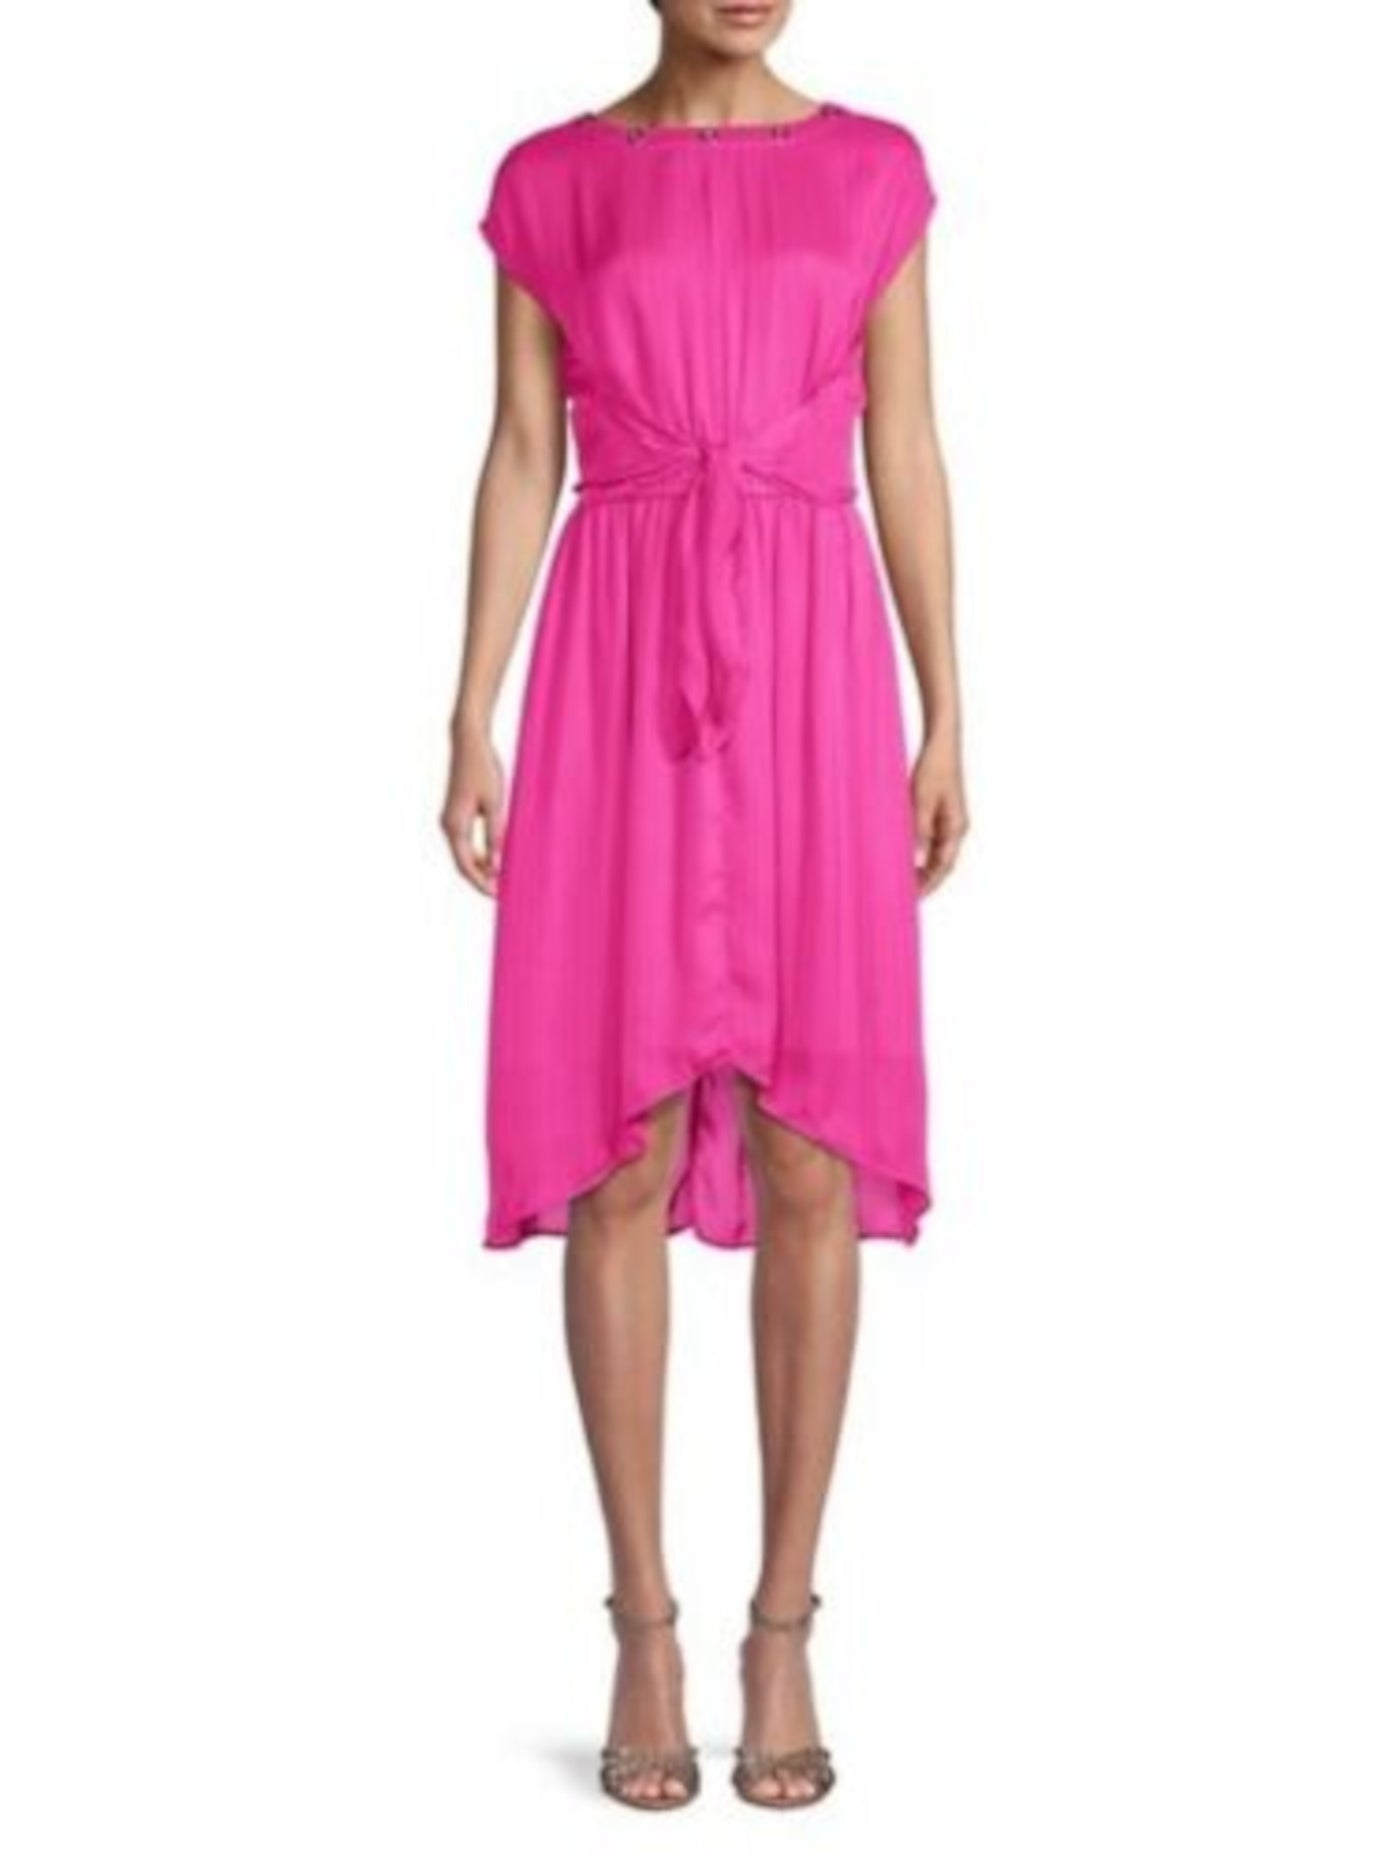 MICHAEL KORS Womens Pink Tie Sheer Keyhole Closure Grommets Hi-lo Cap Sleeve Round Neck Below The Knee Wear To Work Fit + Flare Dress XL